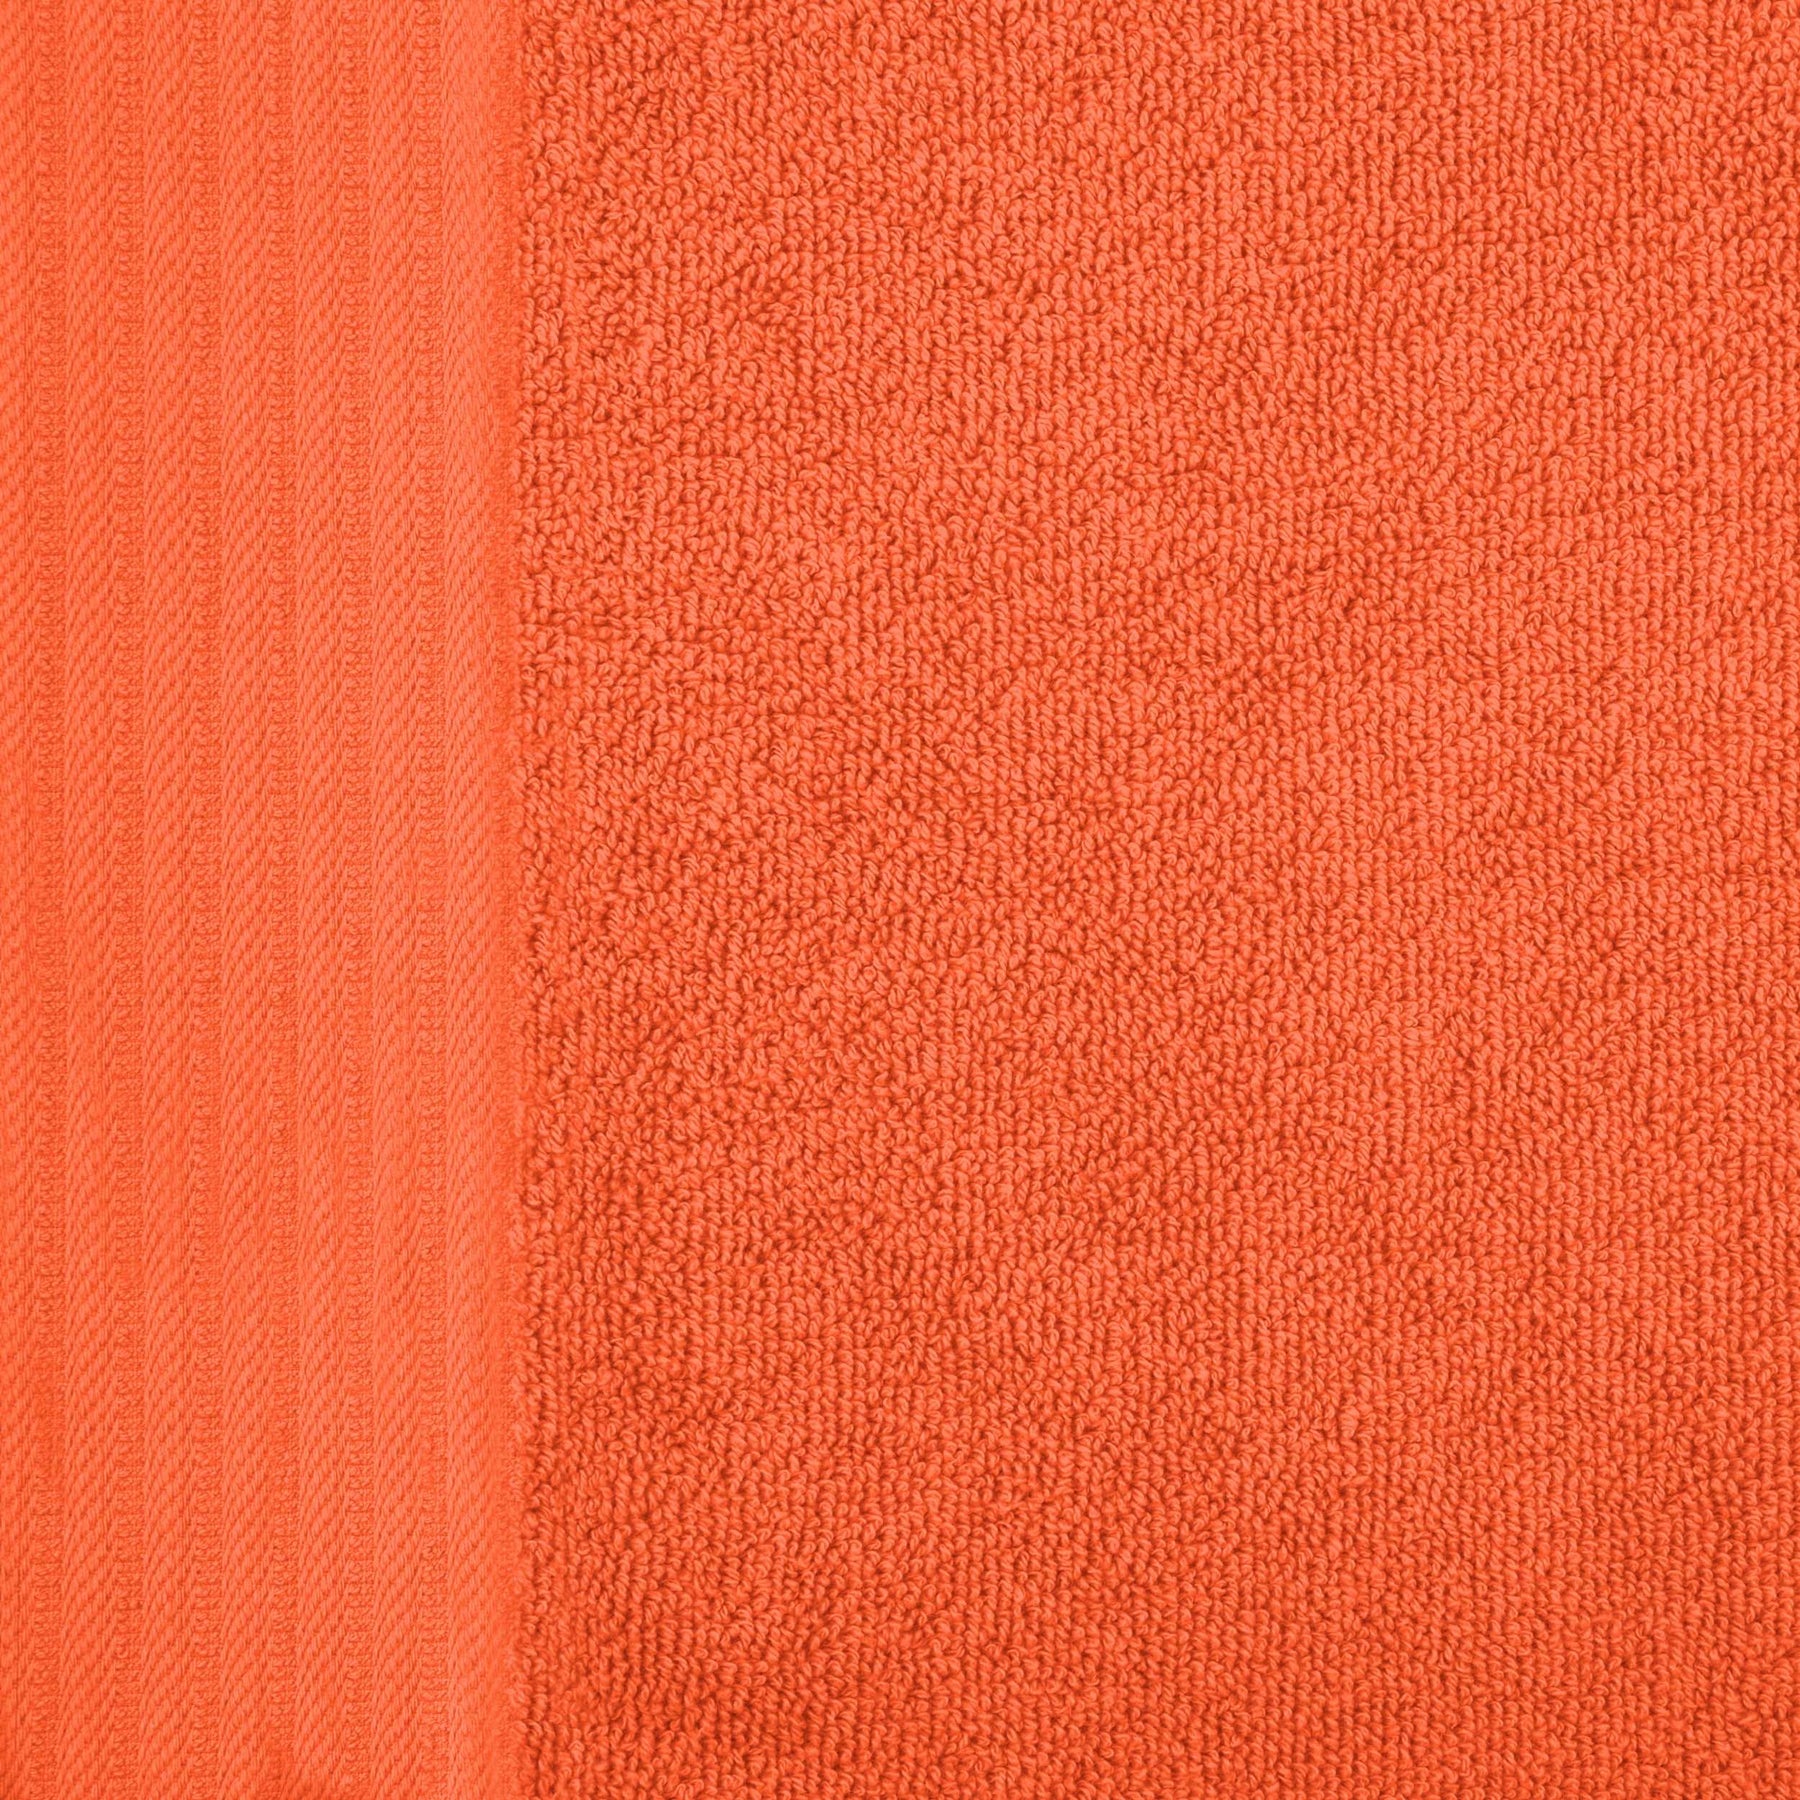 Premium Turkish Cotton Herringbone Solid Assorted 6-Piece Towel Set - Emberglow